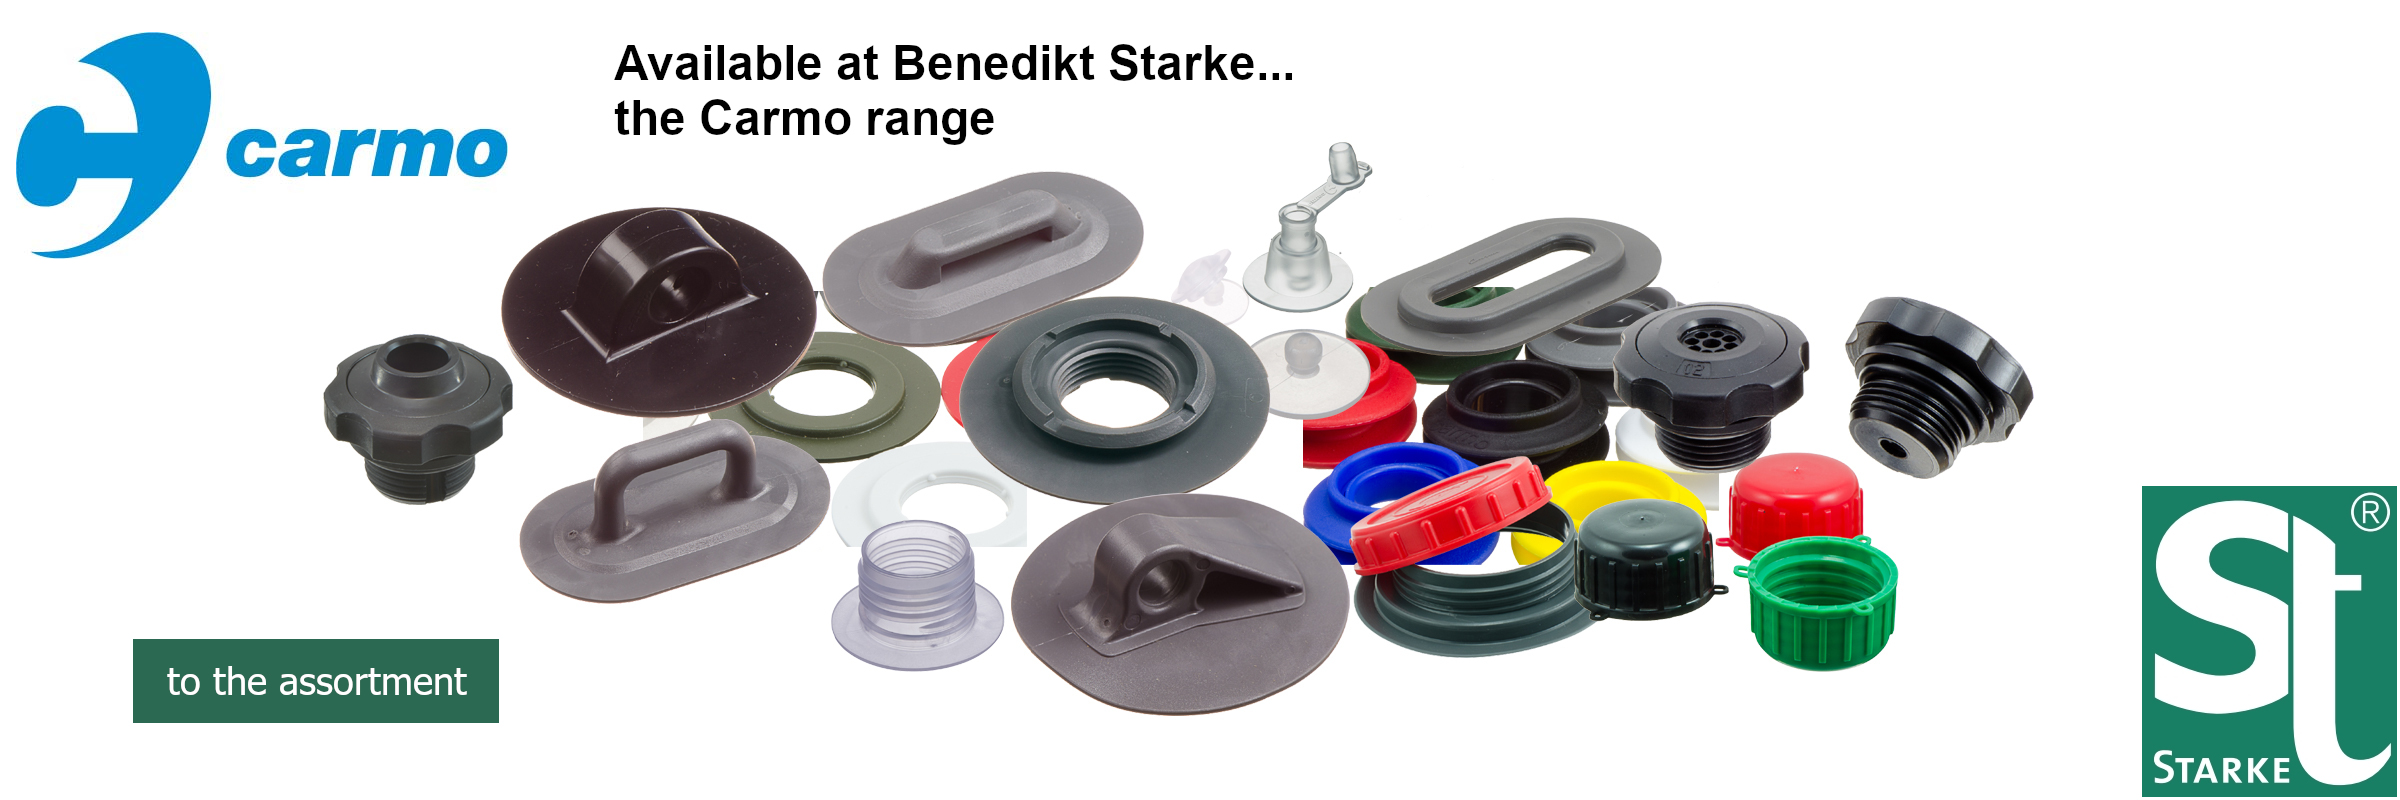 The Carmo range available at Benedikt Starke